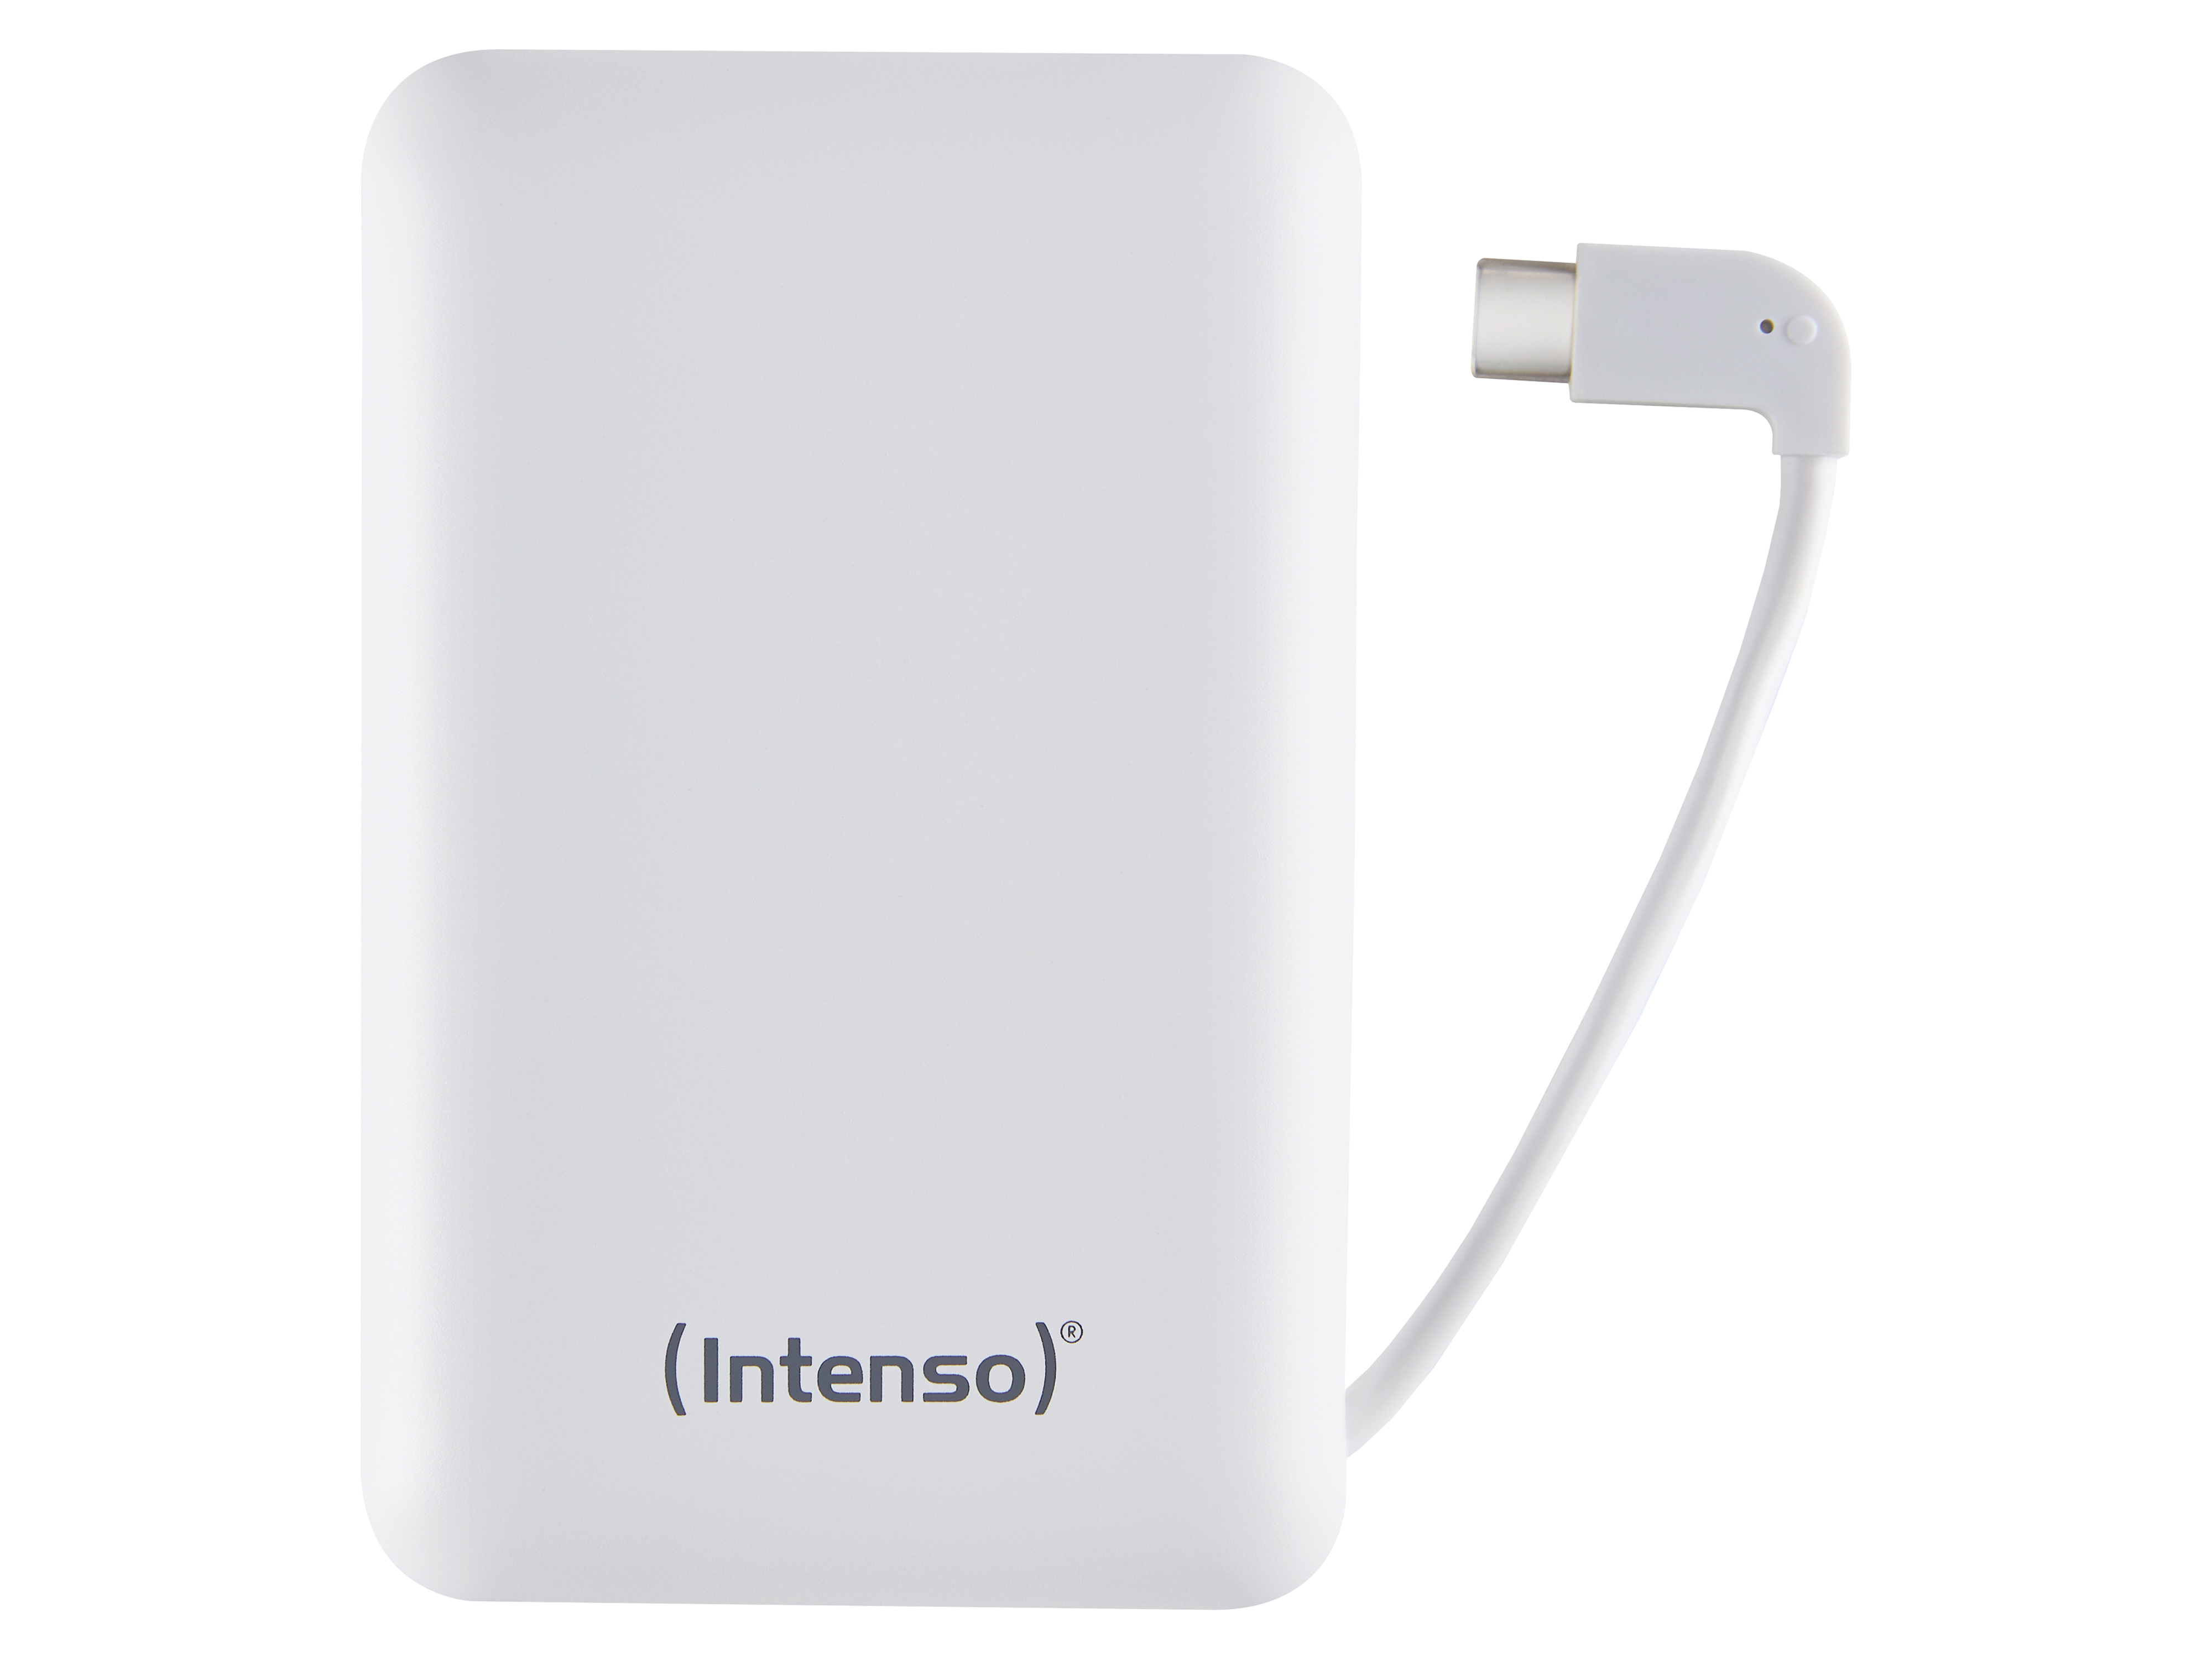 INTENSO USB Powerbank 7314532 XC 10000, 10.000 mAh, weiß